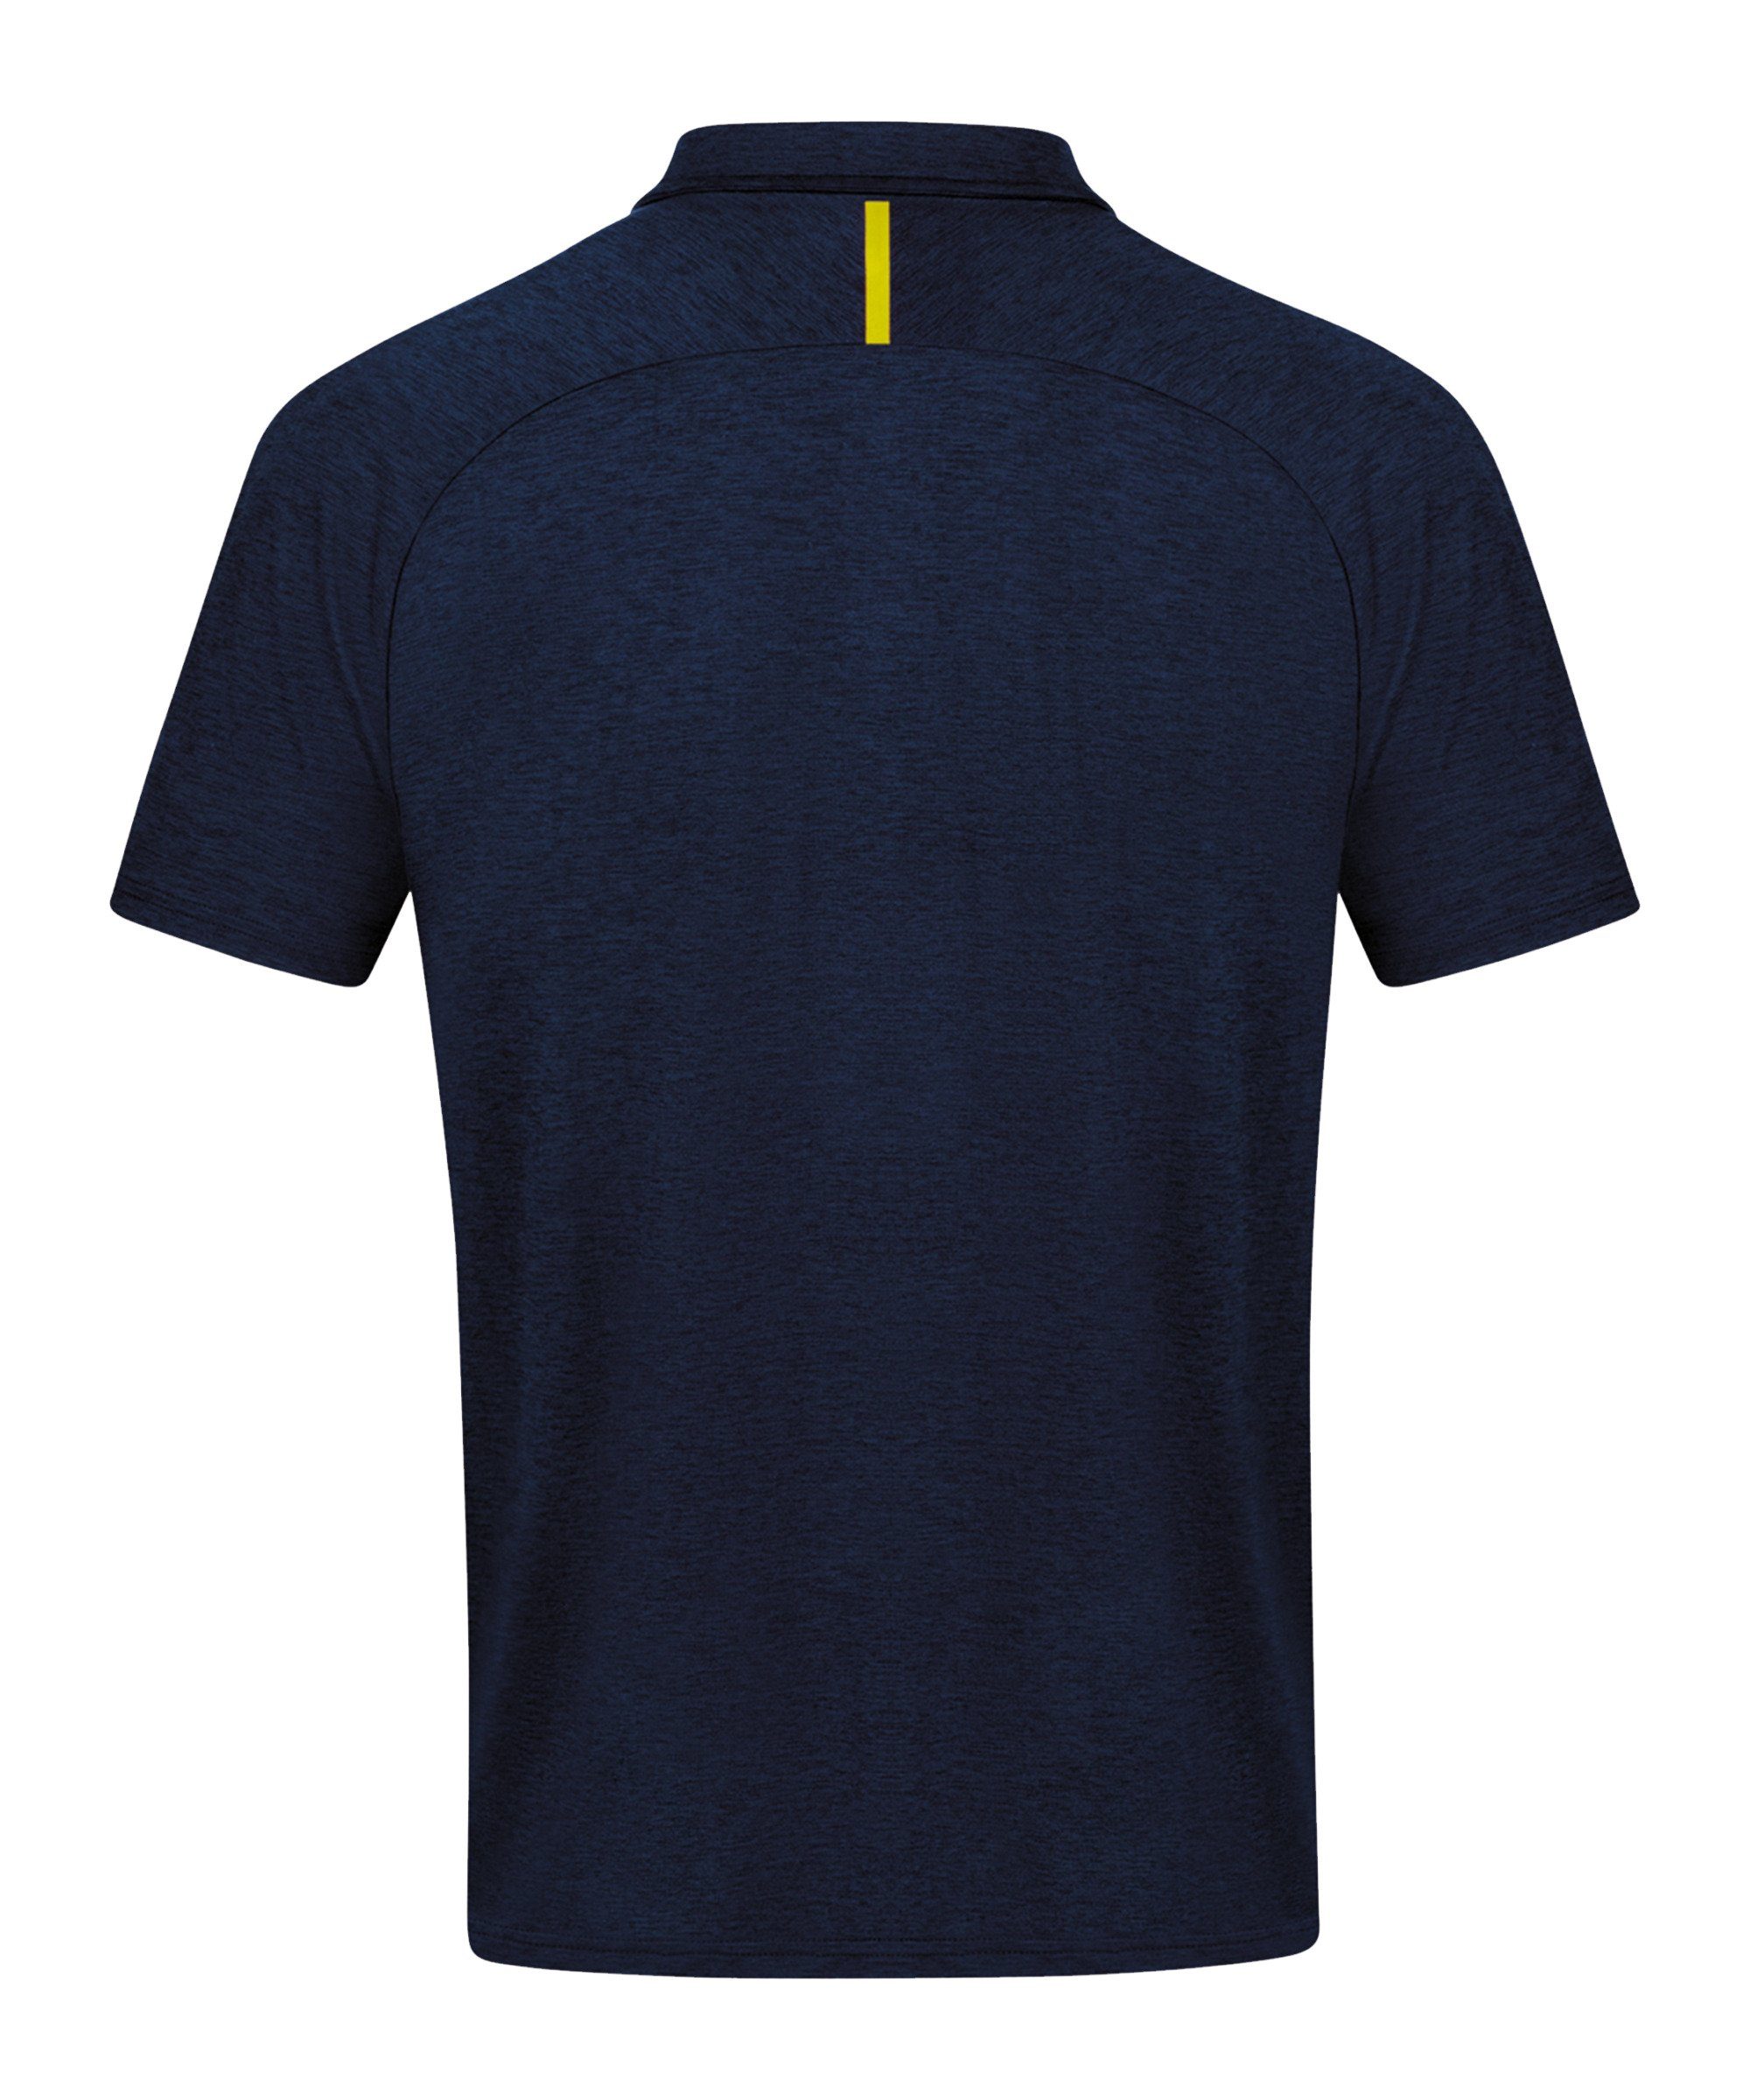 Jako T-Shirt default Polo blaugelb Challenge